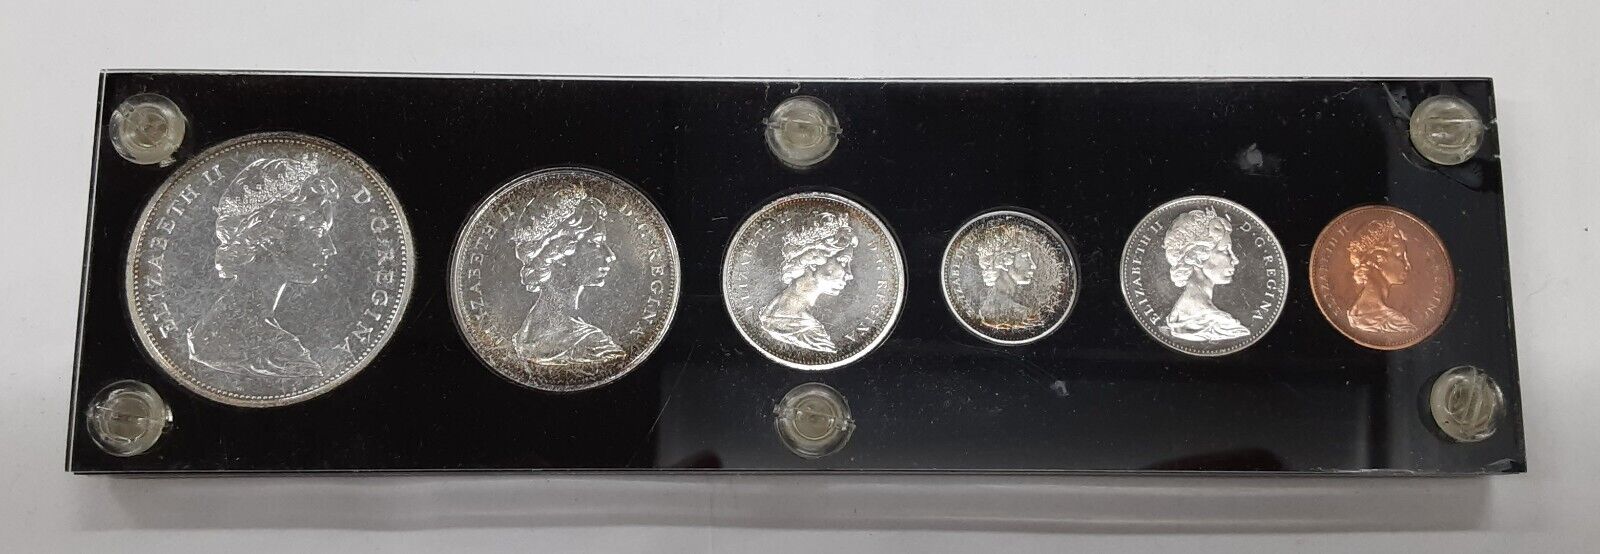 1965 Canada 6 Coin Mint Set Queen Elizabeth II BU in Black Acrylic Holder